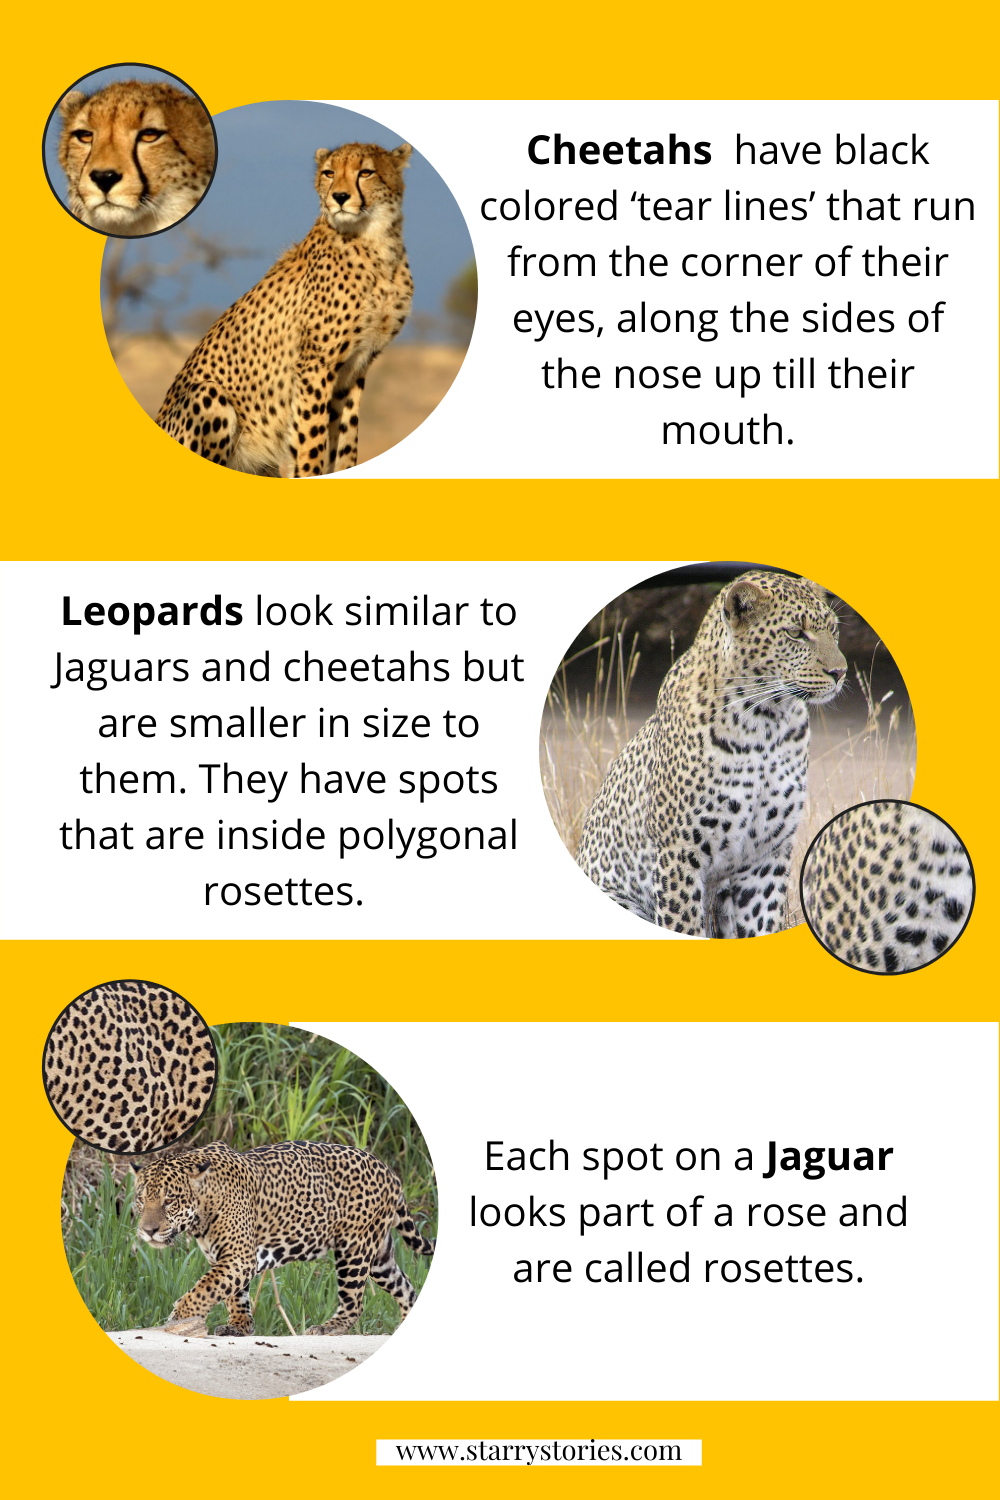 Did You Just Spot a Cheetah a Leopard and a Jaguar - Starry Stories